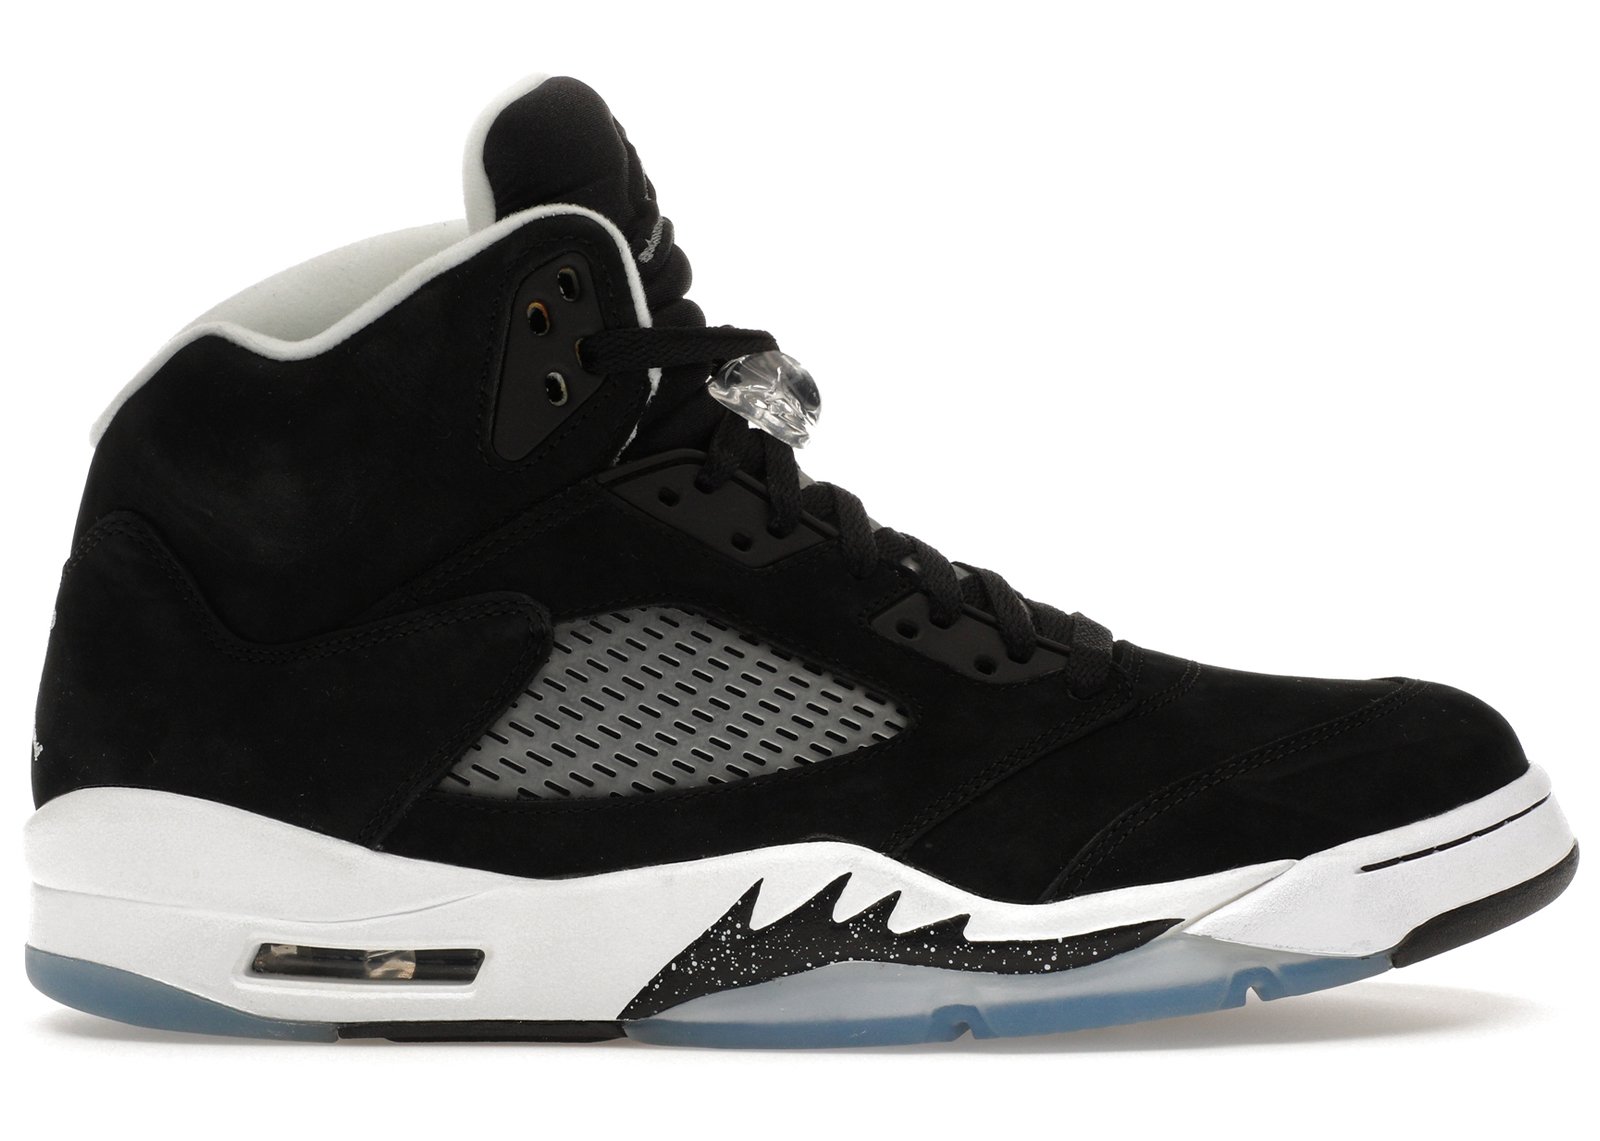 Jordan 5 Retro Oreo (2013) sneakers